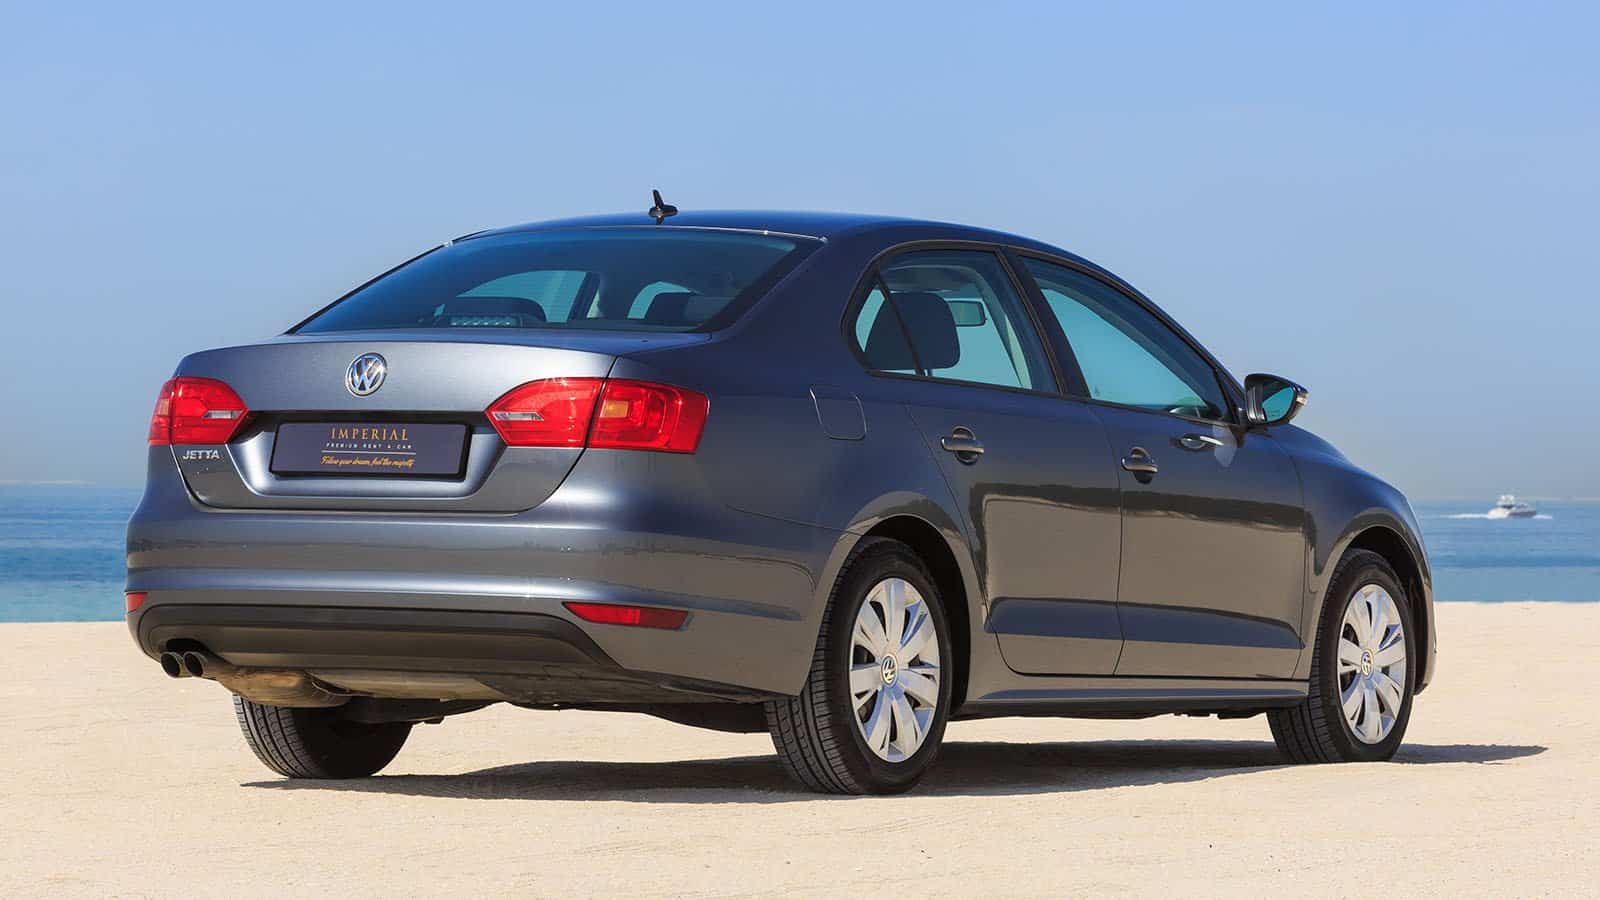 Volkswagen Jetta Dubai Car Rental